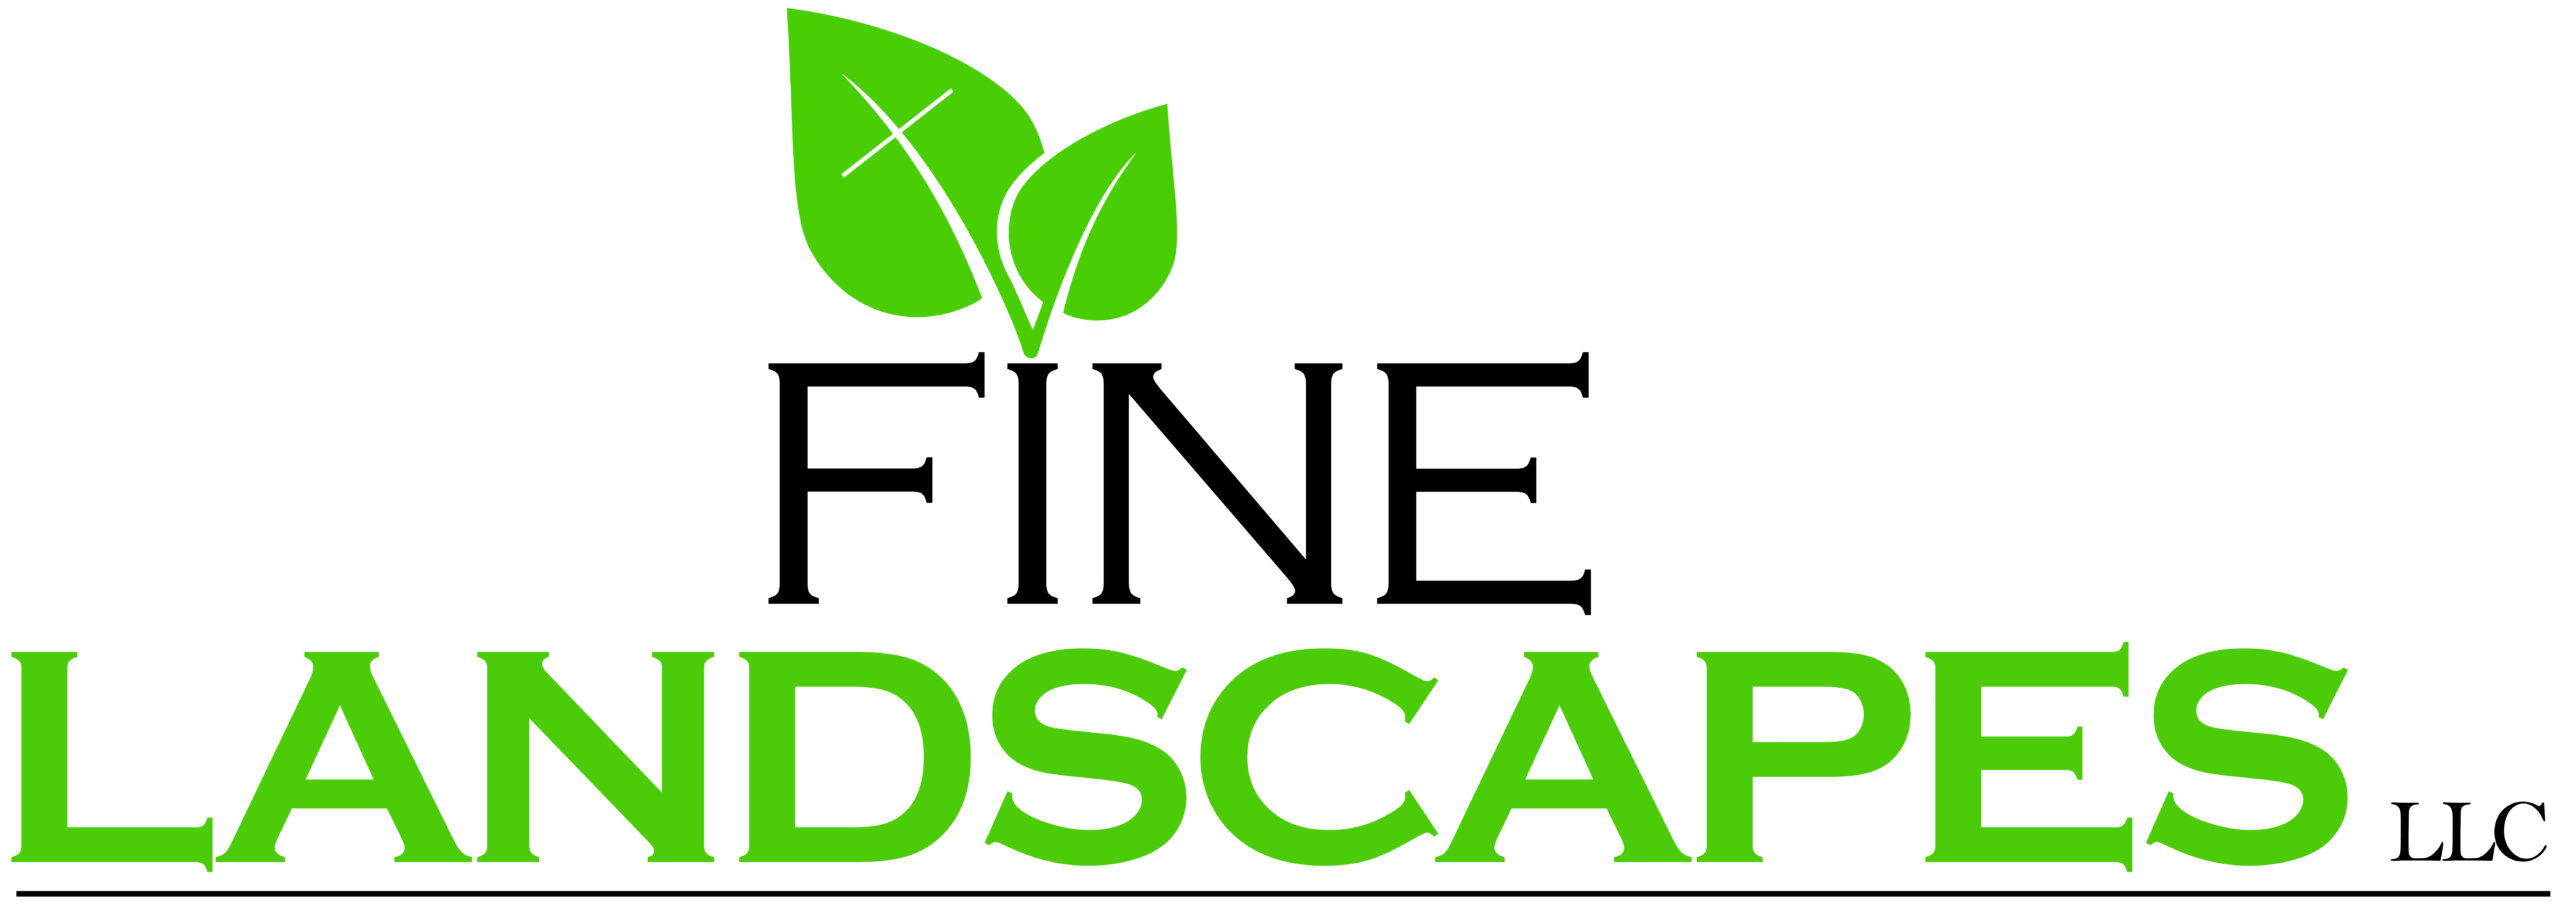 Fine Landscapes LLC | Landscape Design | Lawn Care | (908) 878-8553 